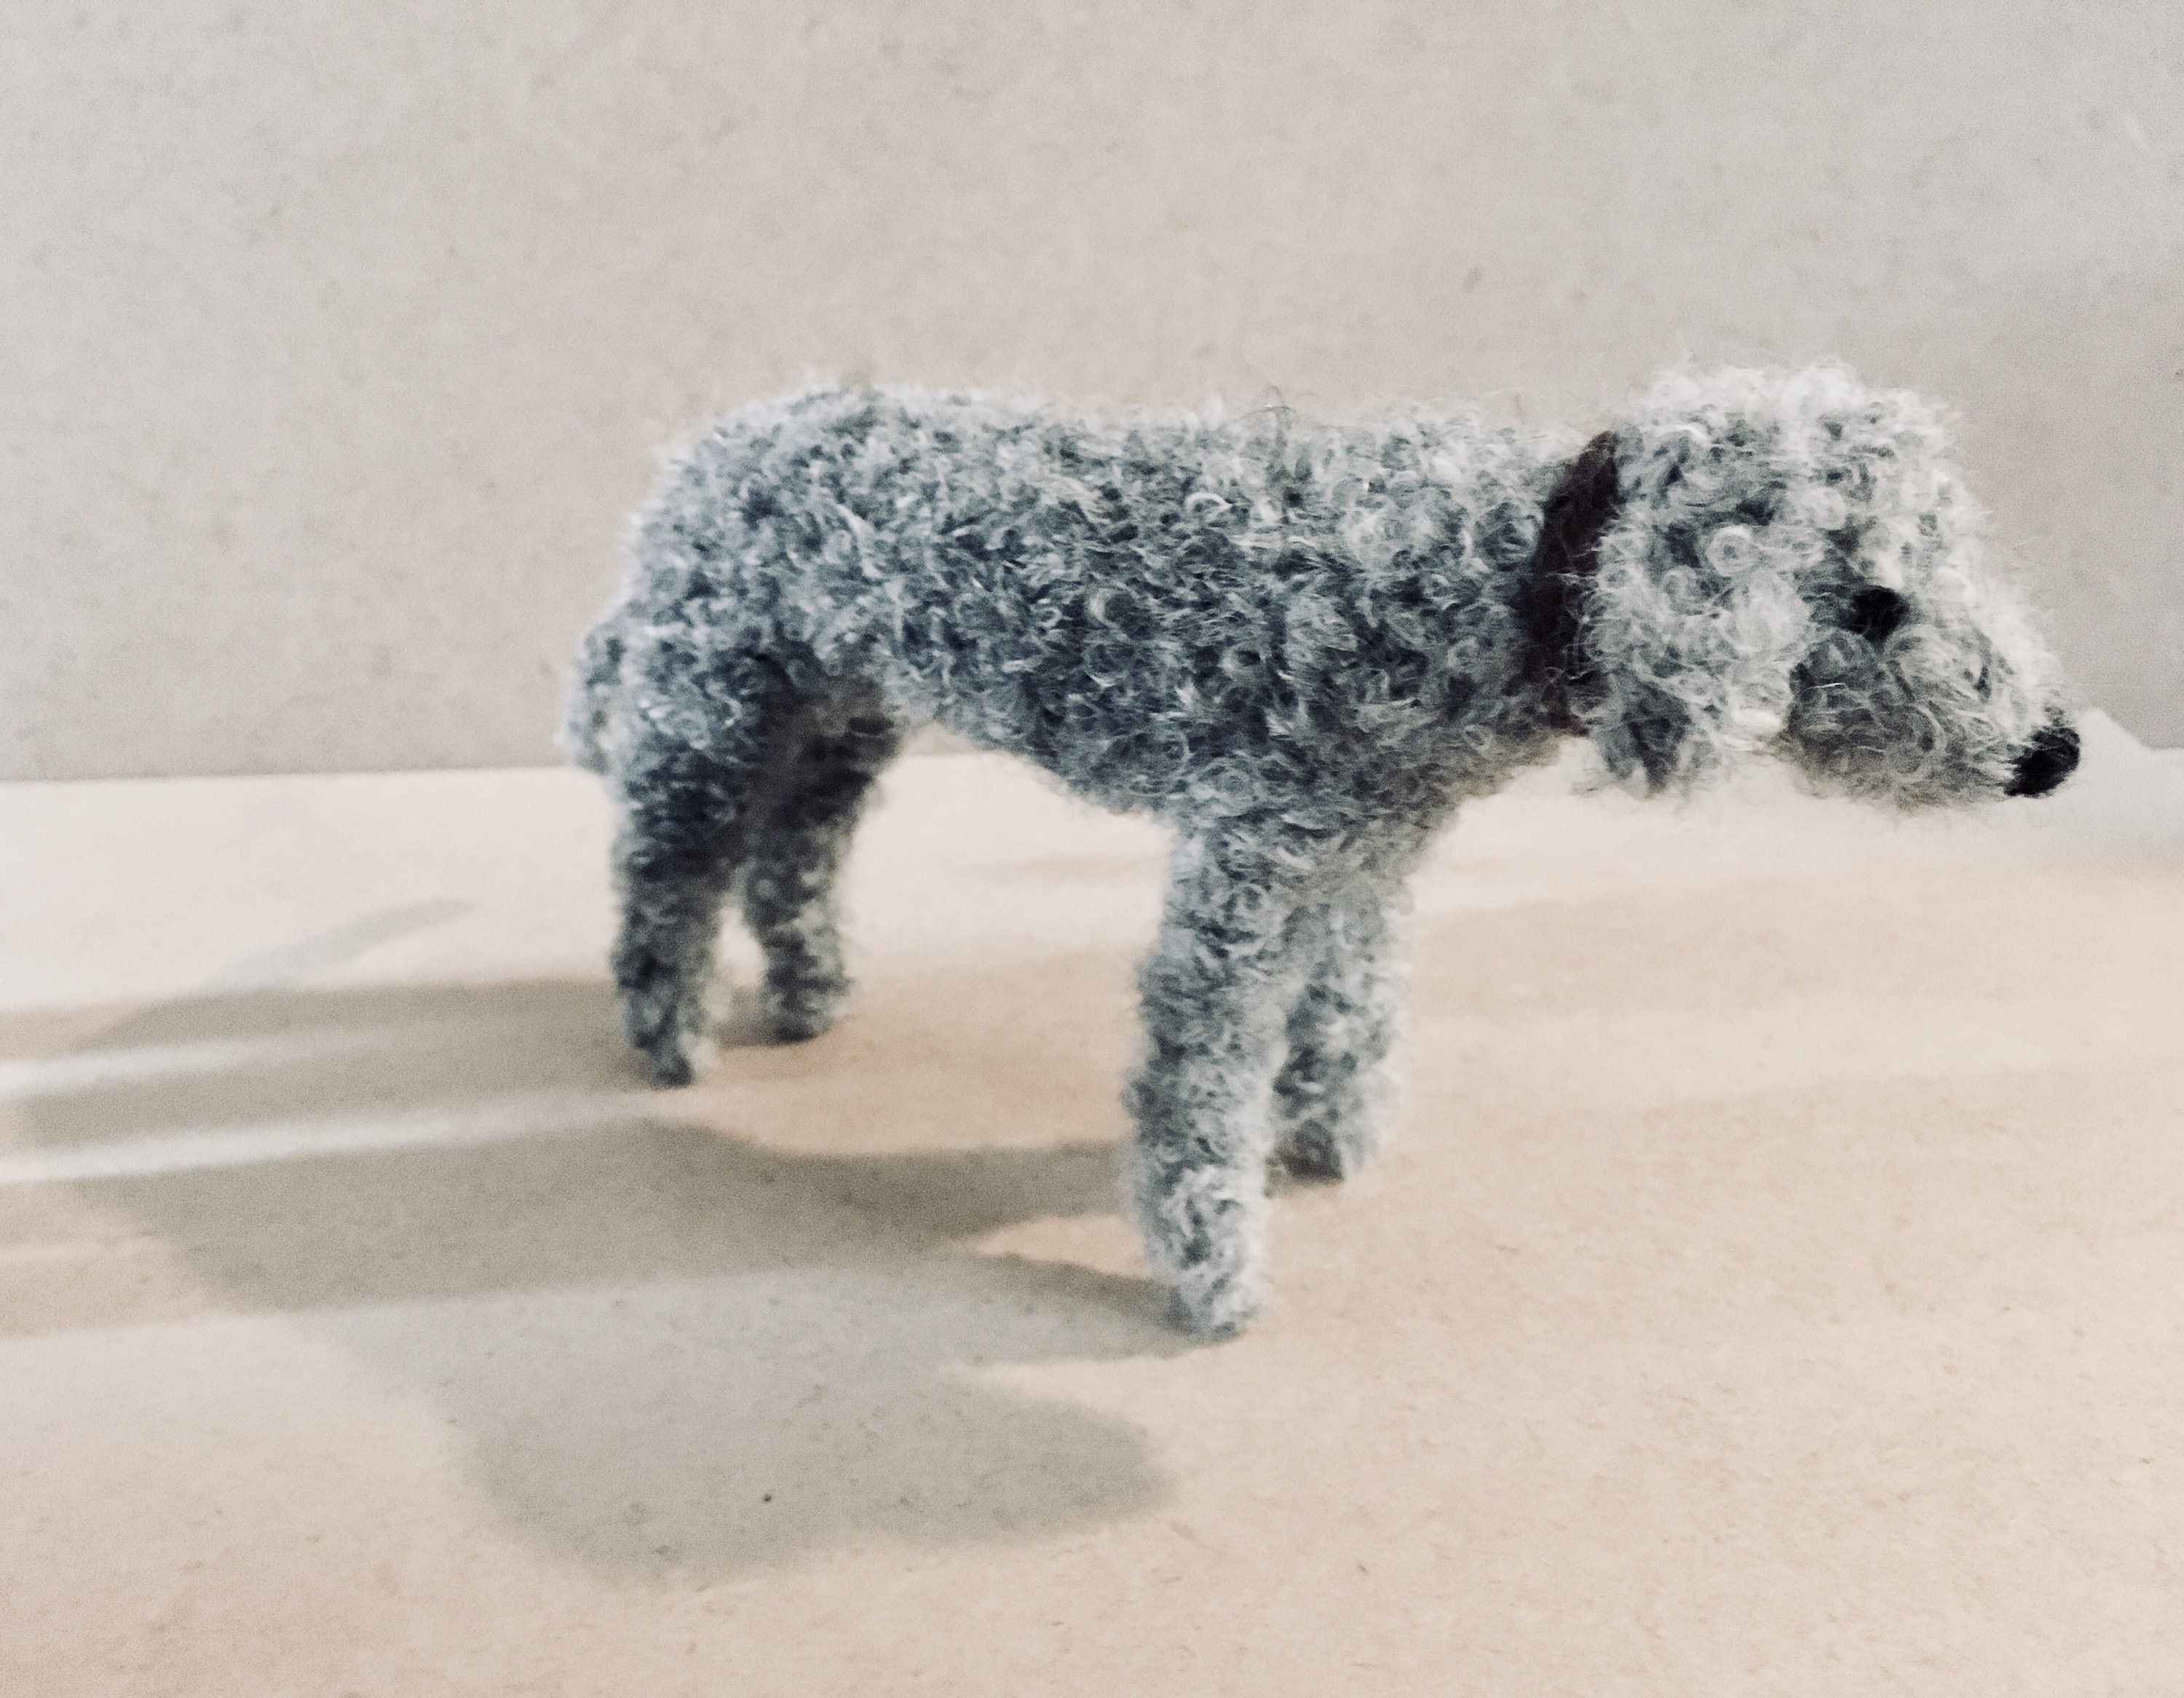 Bedlington Terrier Puppy. Realistic stuffed miniature toy. - Inspire Uplift